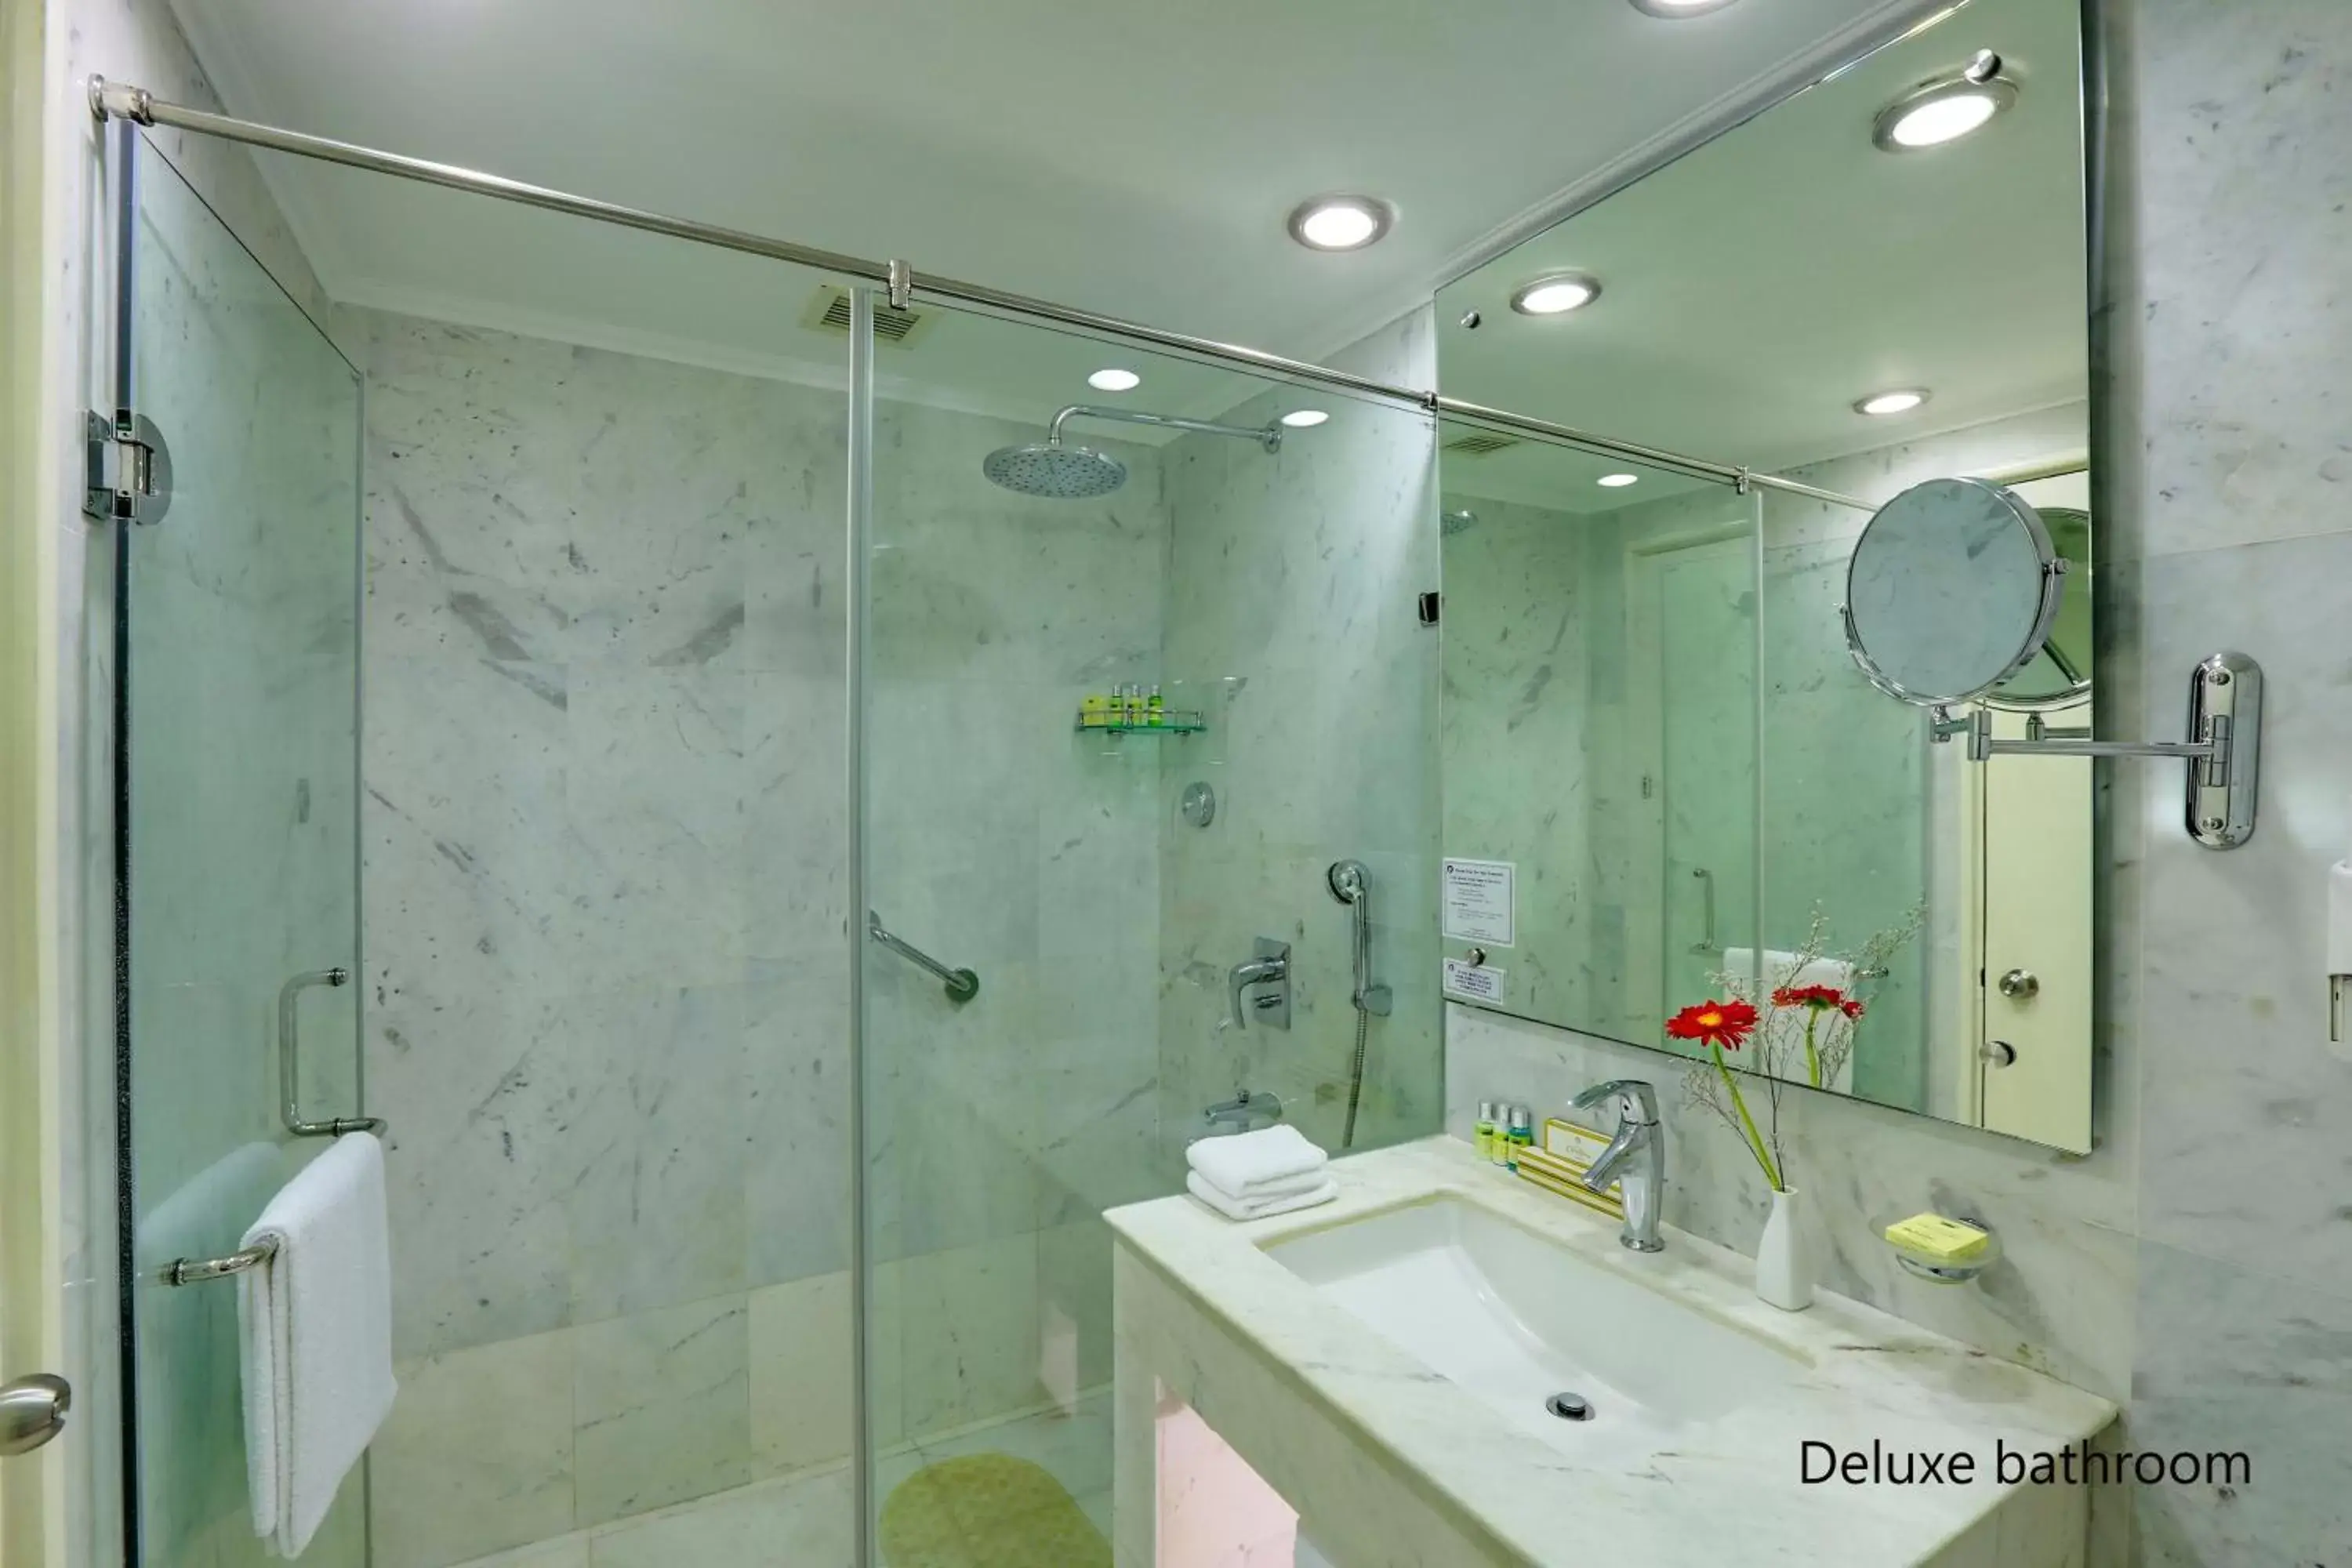 Bathroom in Hotel Clarks Shiraz